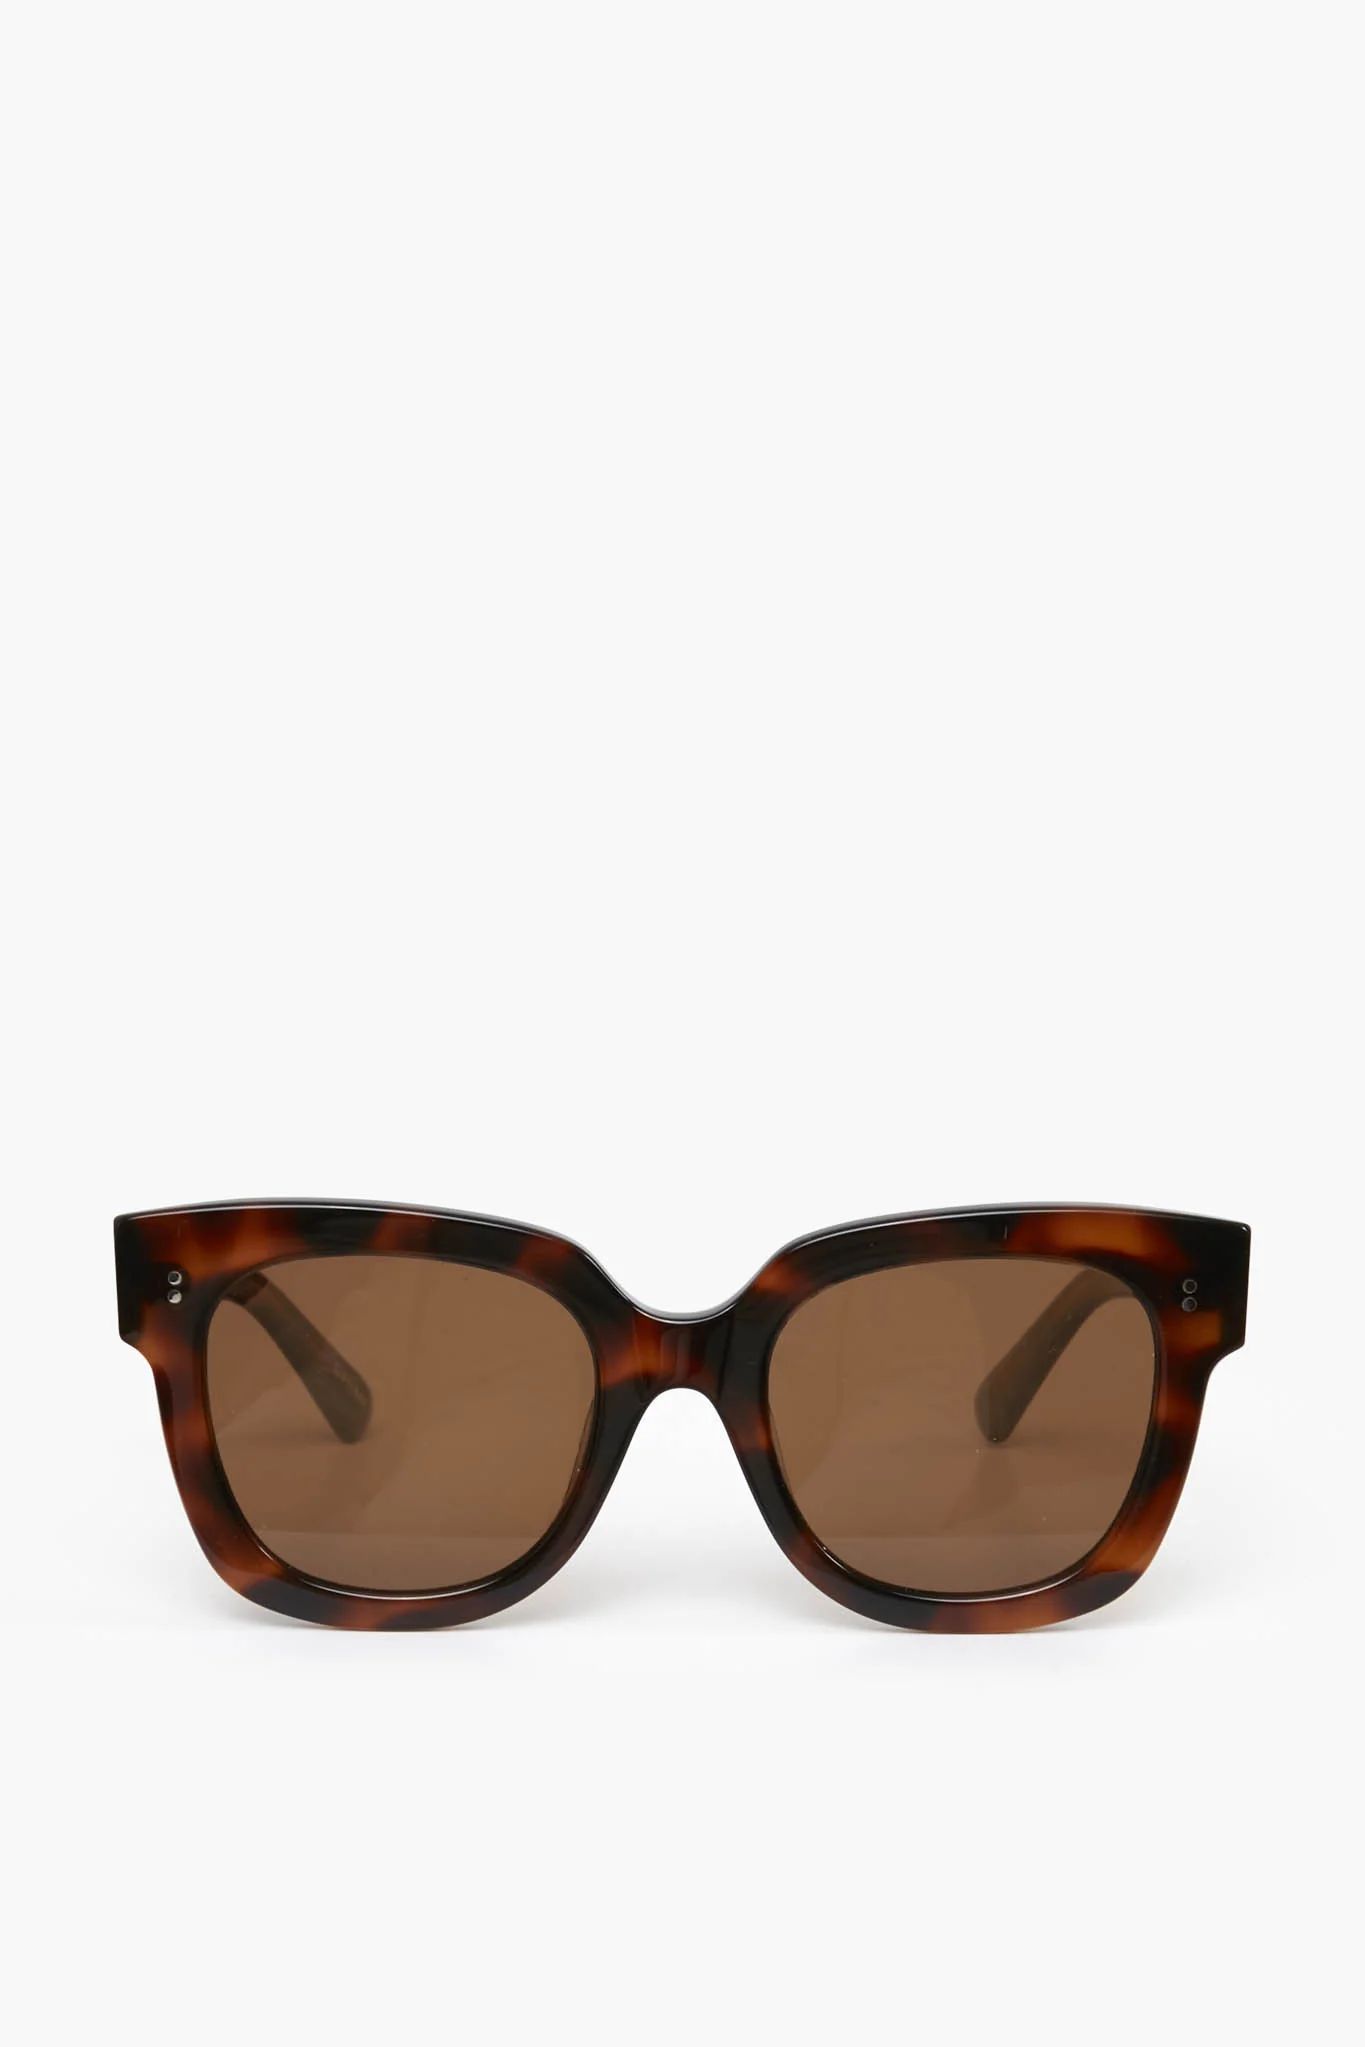 08 Oversized Square Tortoise Sunglasses | Tuckernuck (US)